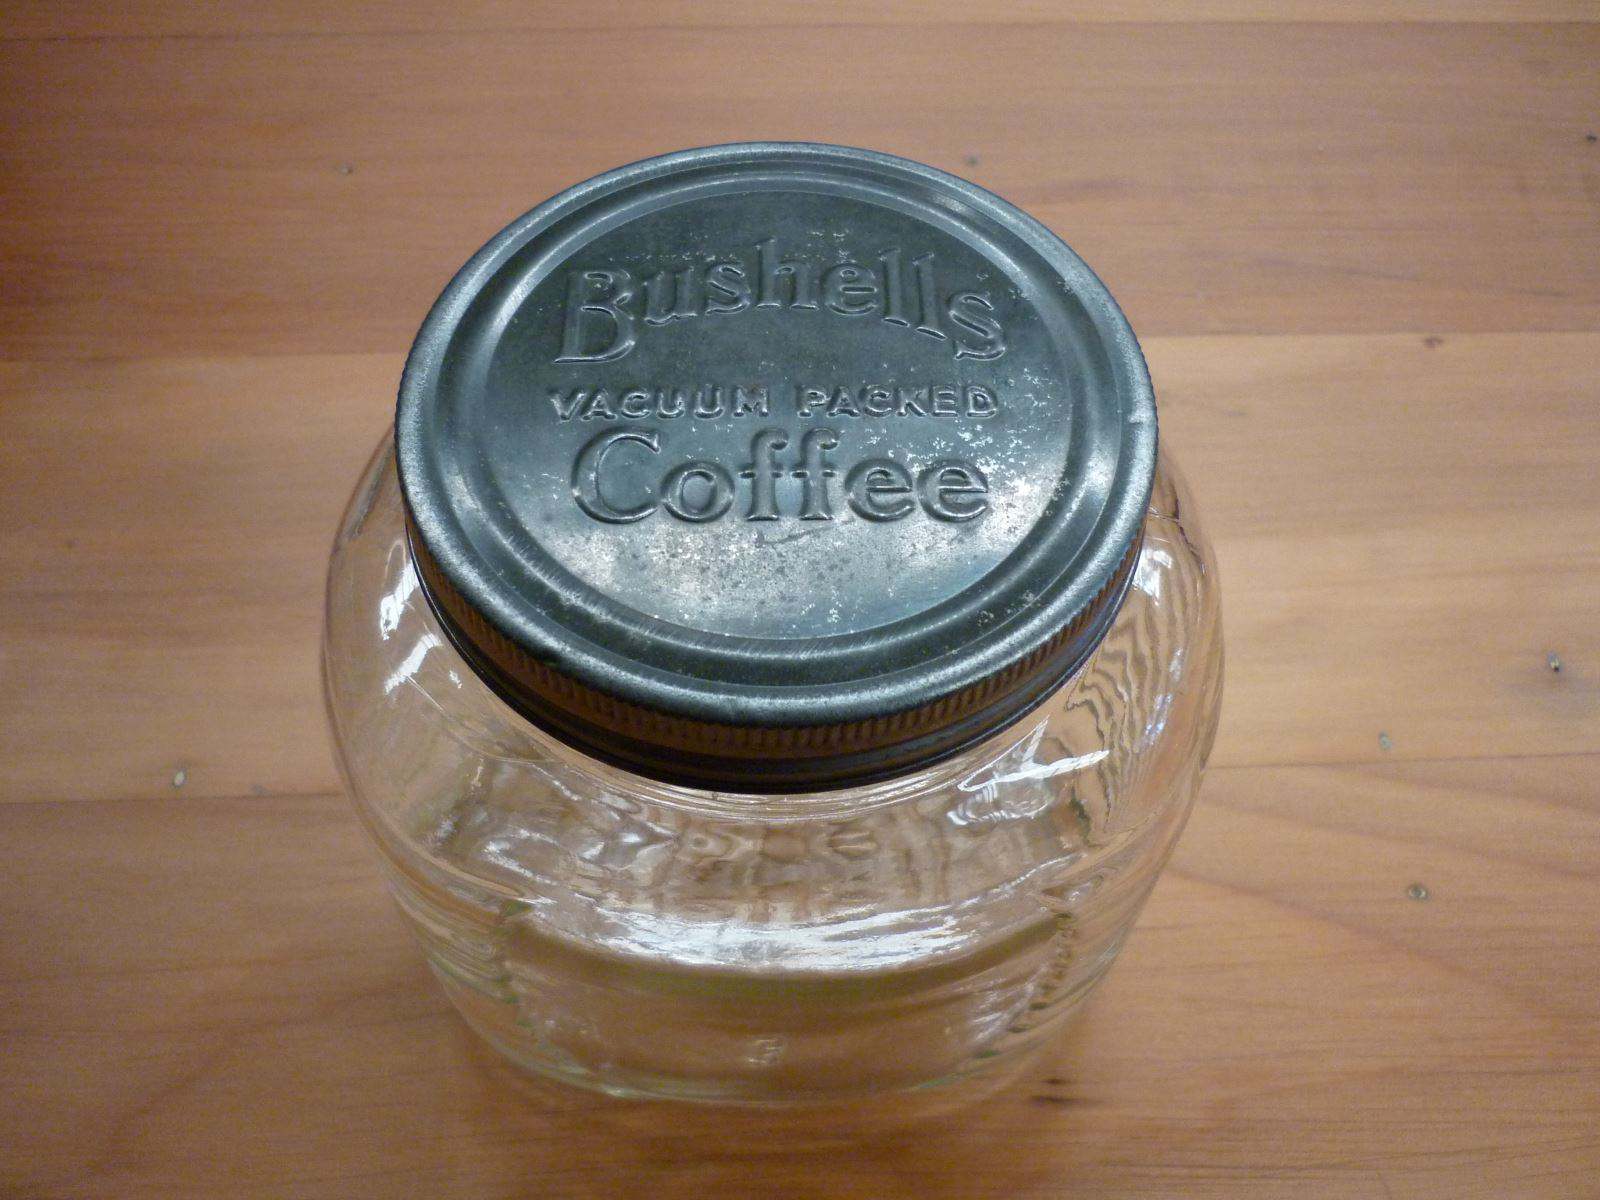 Bushells Coffee Jar with restored Lid